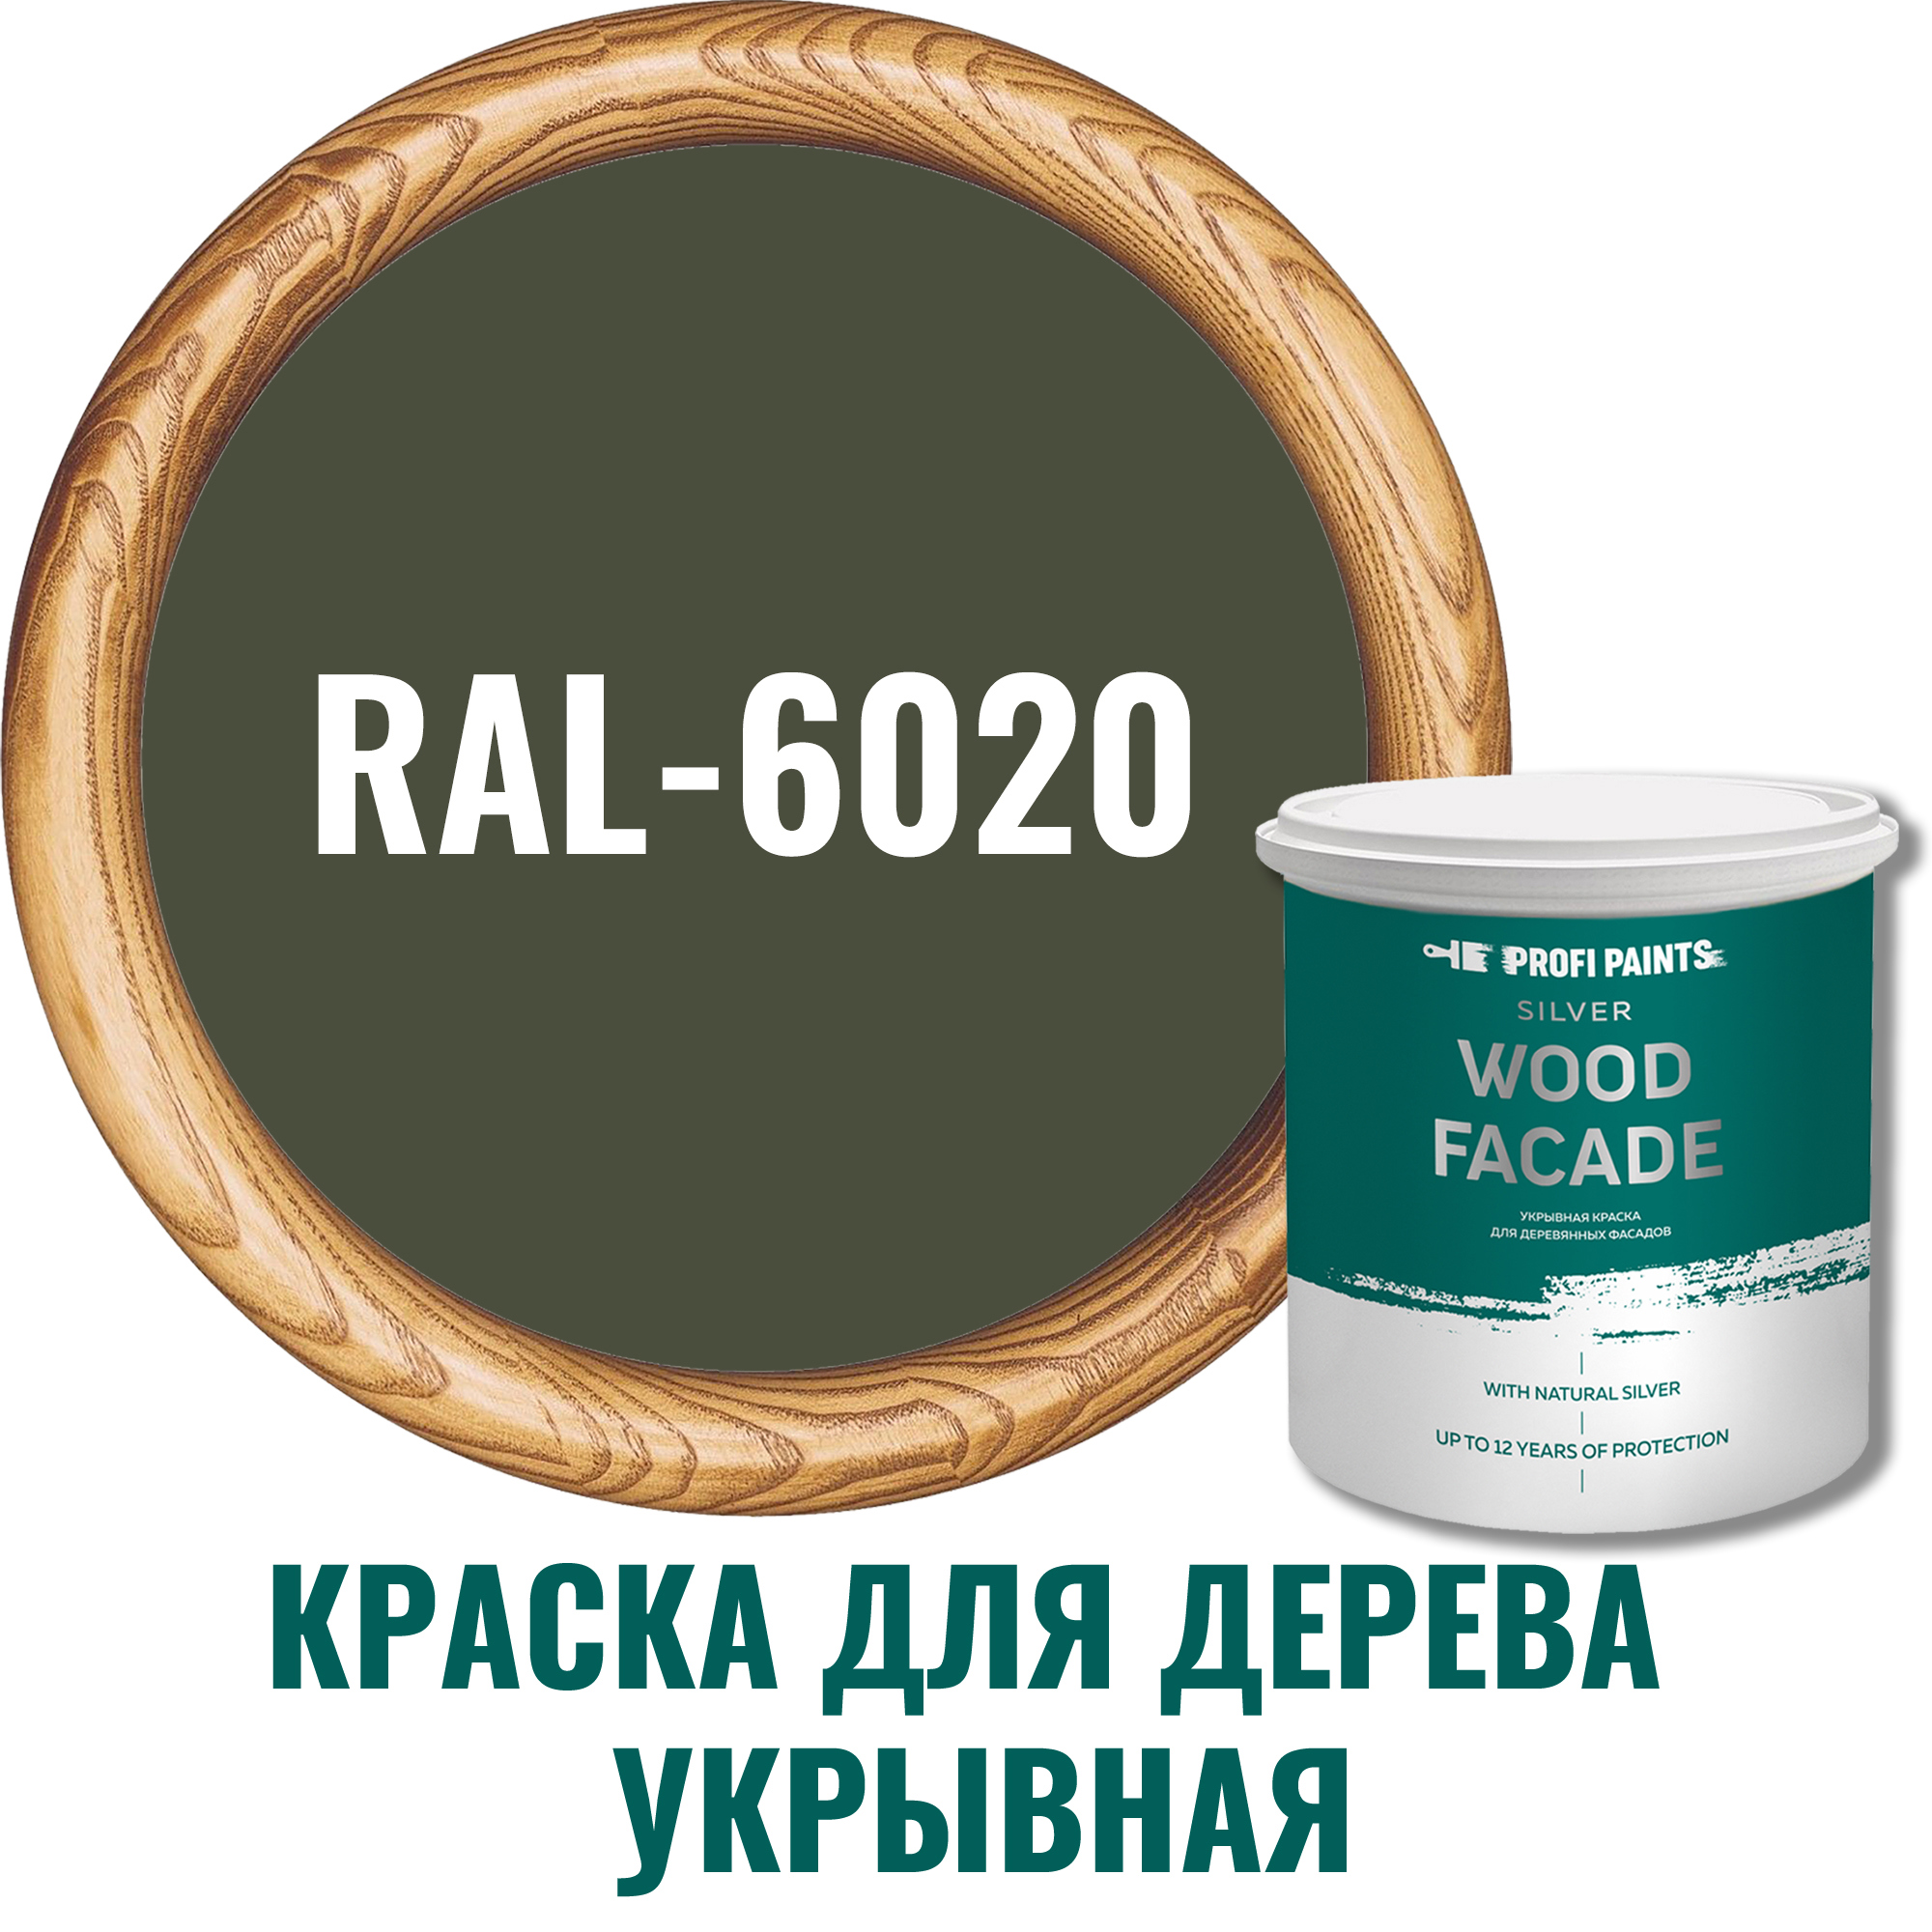 91106581 Краска для дерева 11221_D SILVER WOOD FASADE цвет RAL-6020 зелено-серый 0.9 л STLM-0487579 PROFIPAINTS